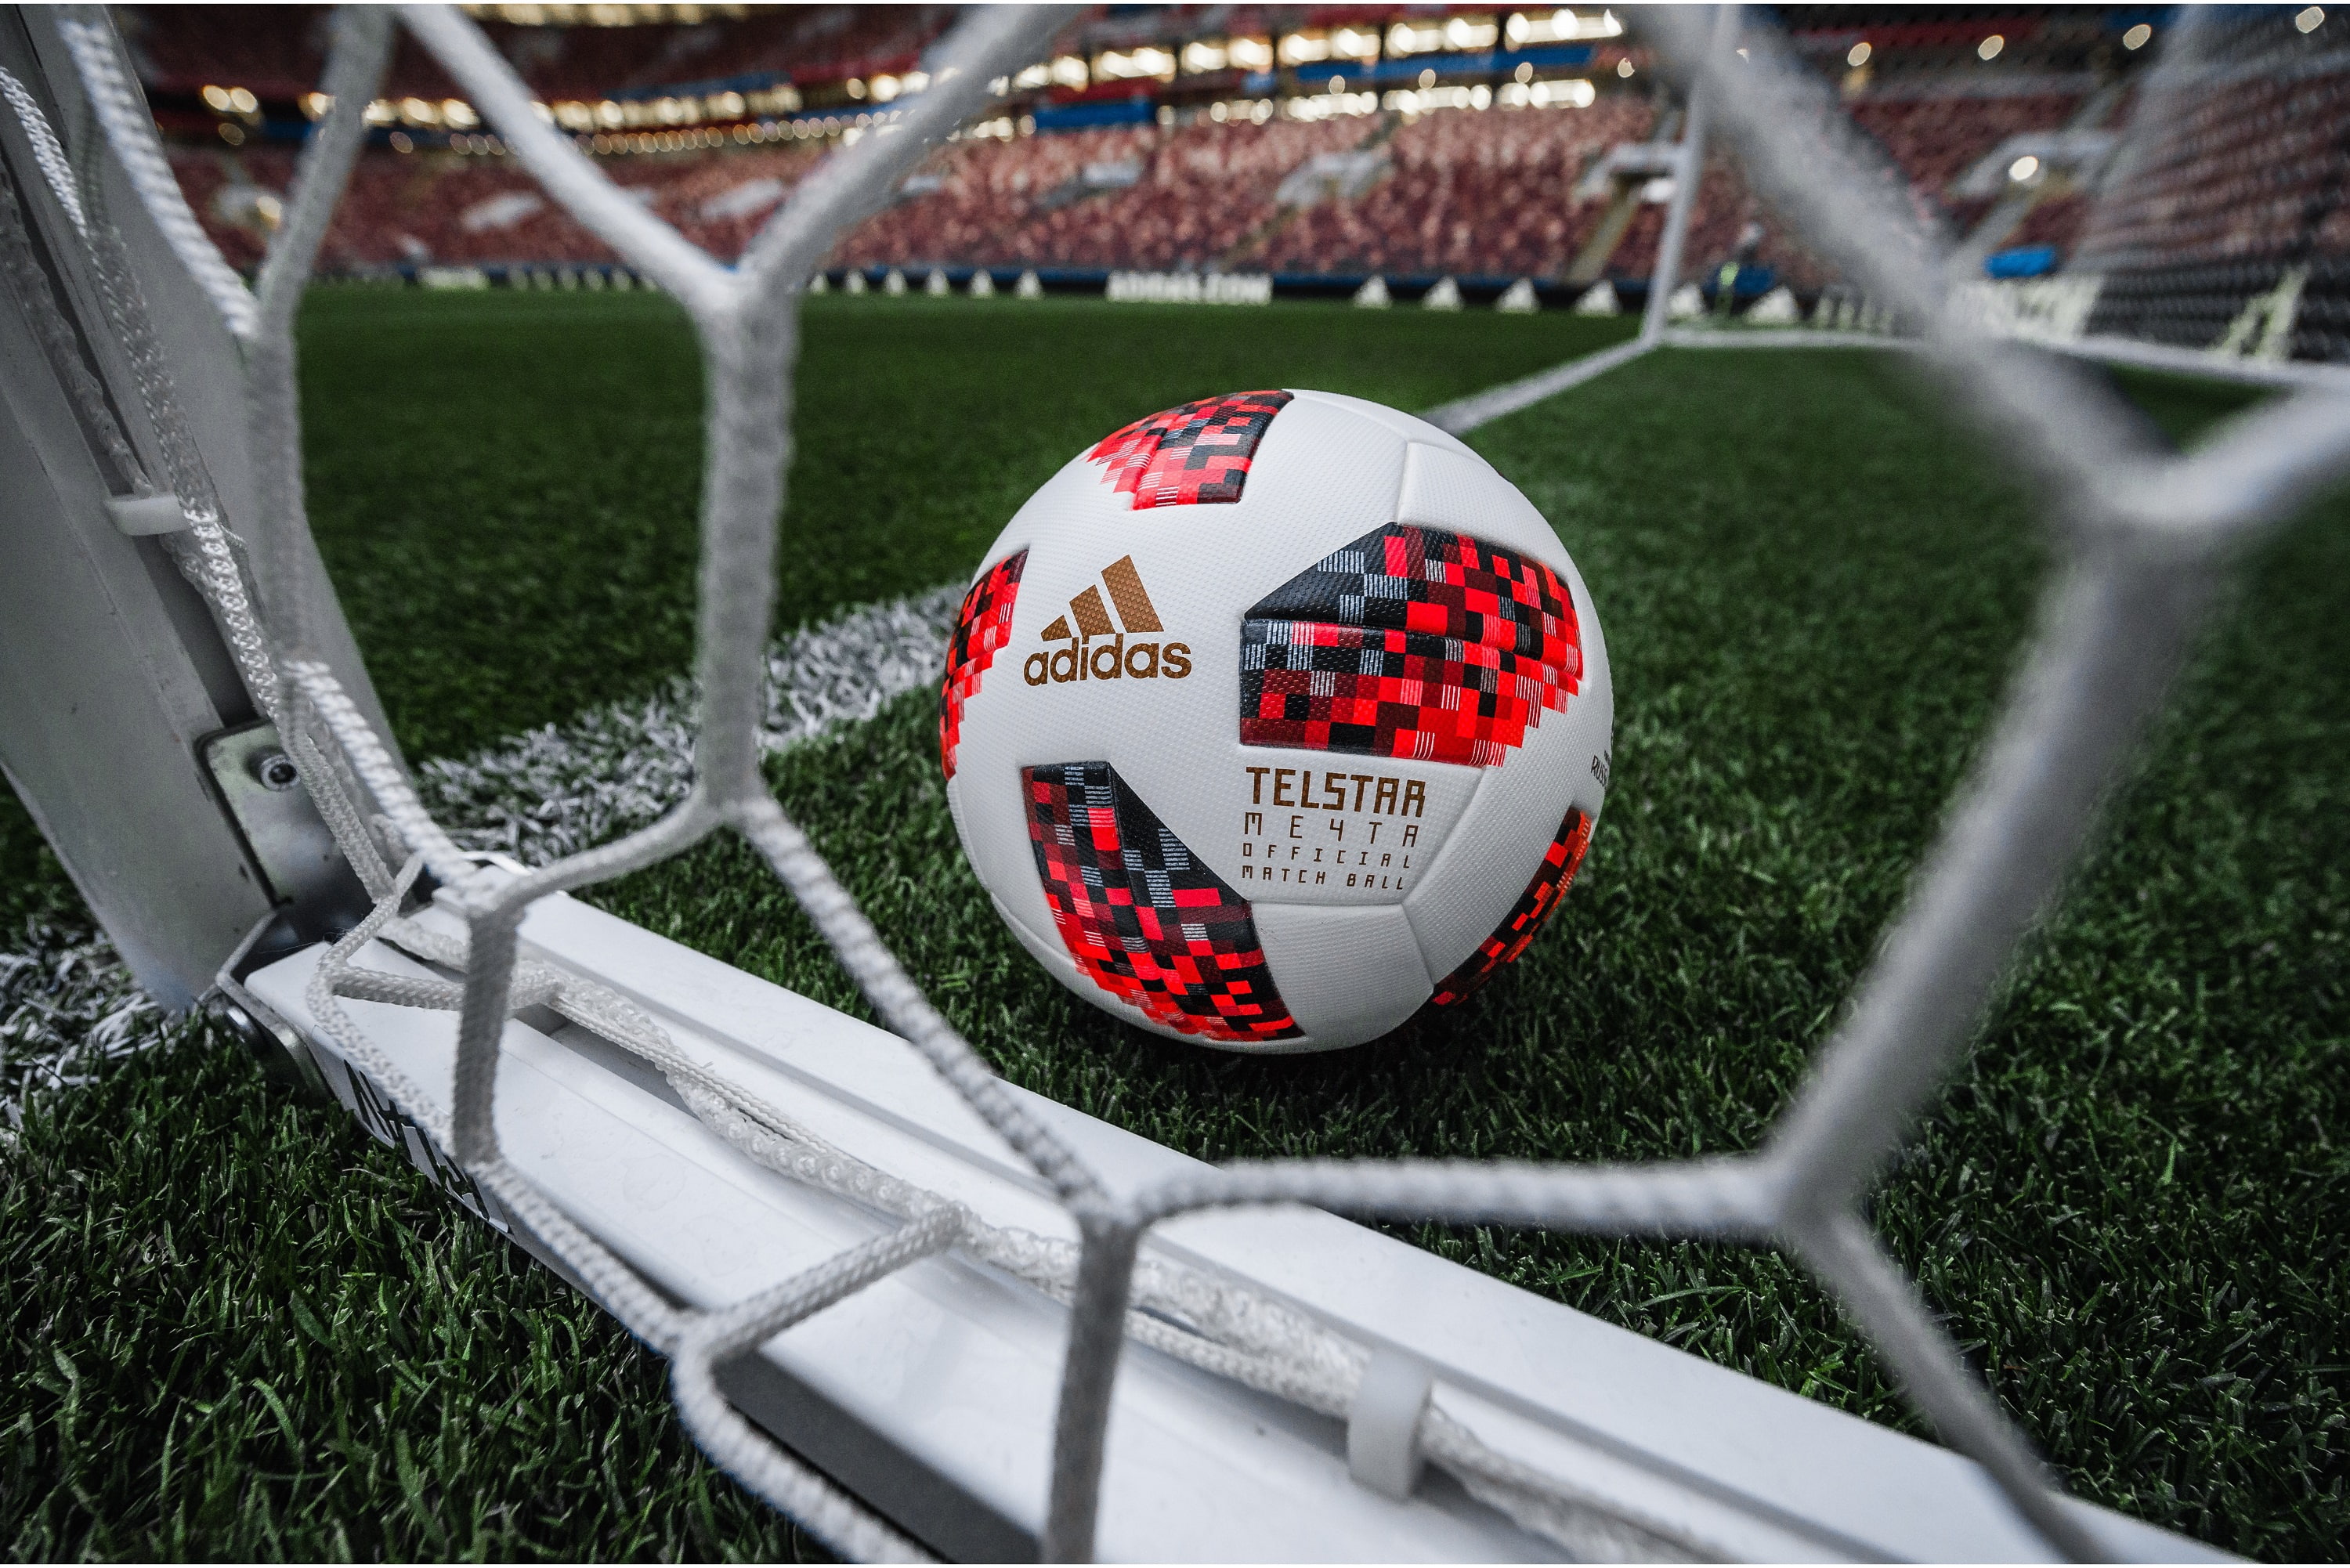 Adidas Soccer Ball In The Field - HD Wallpaper 